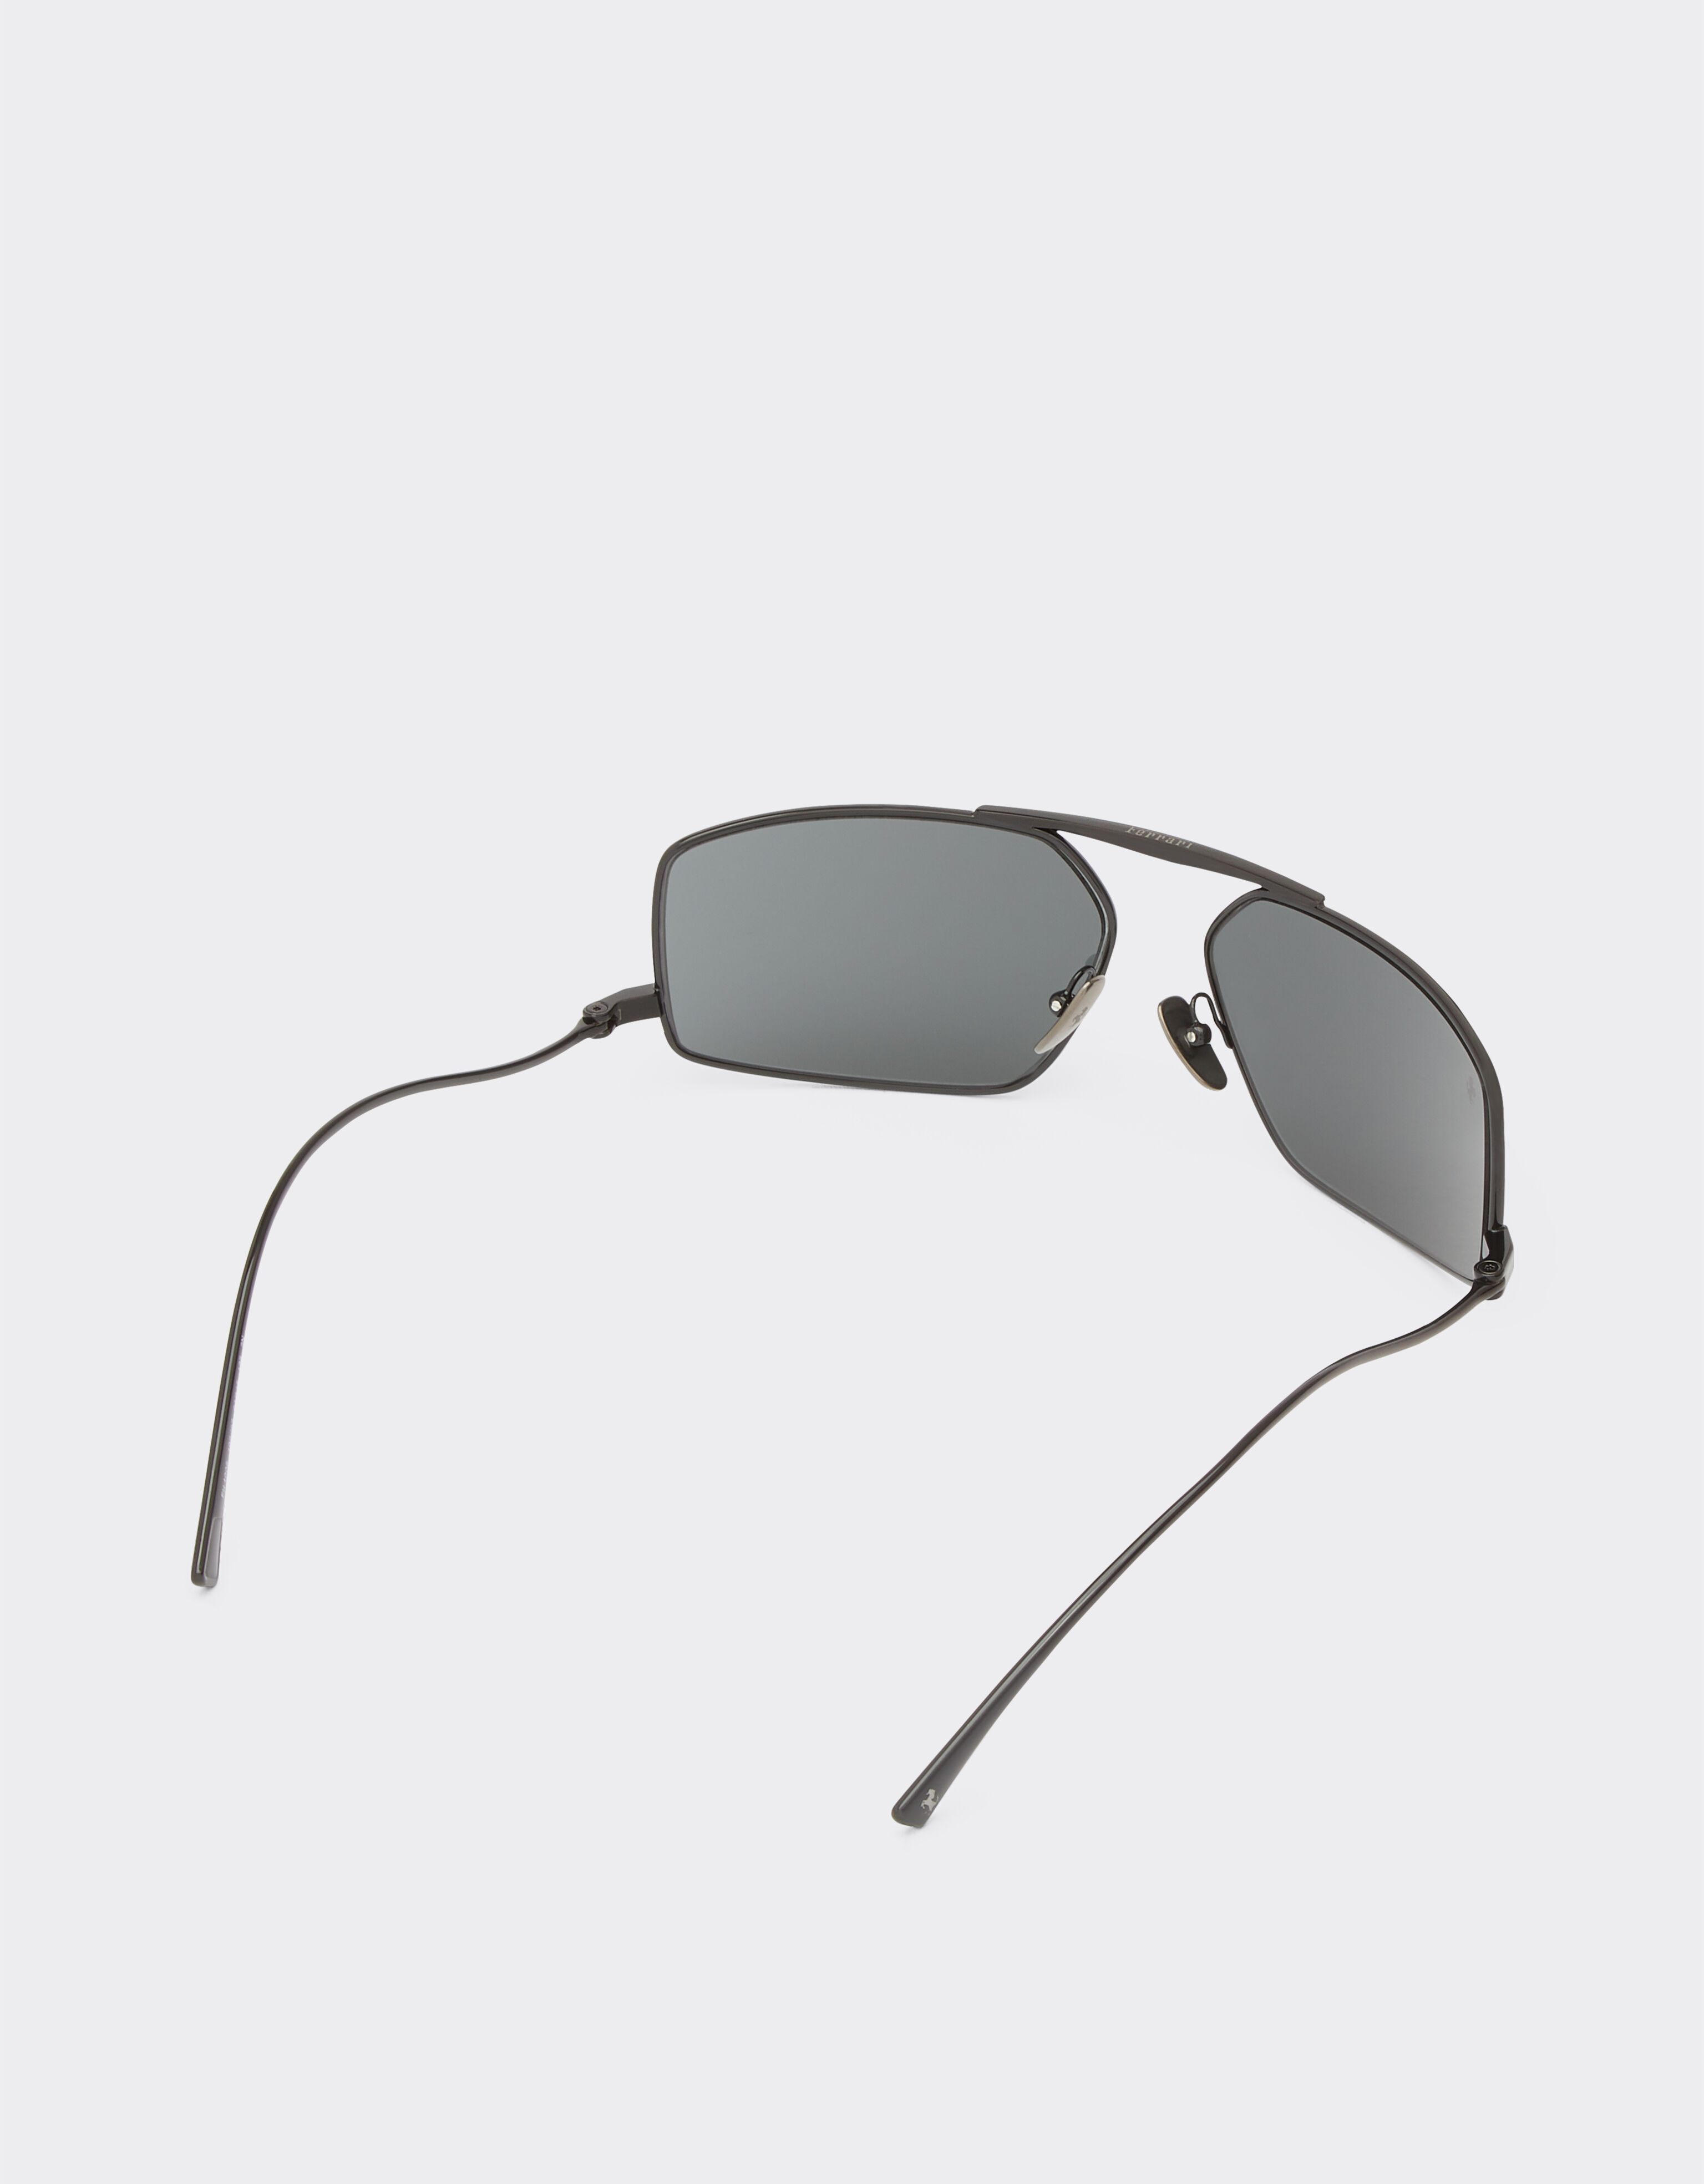 Ferrari Ferrari sunglasses in black metal with grey lenses Black F1211f